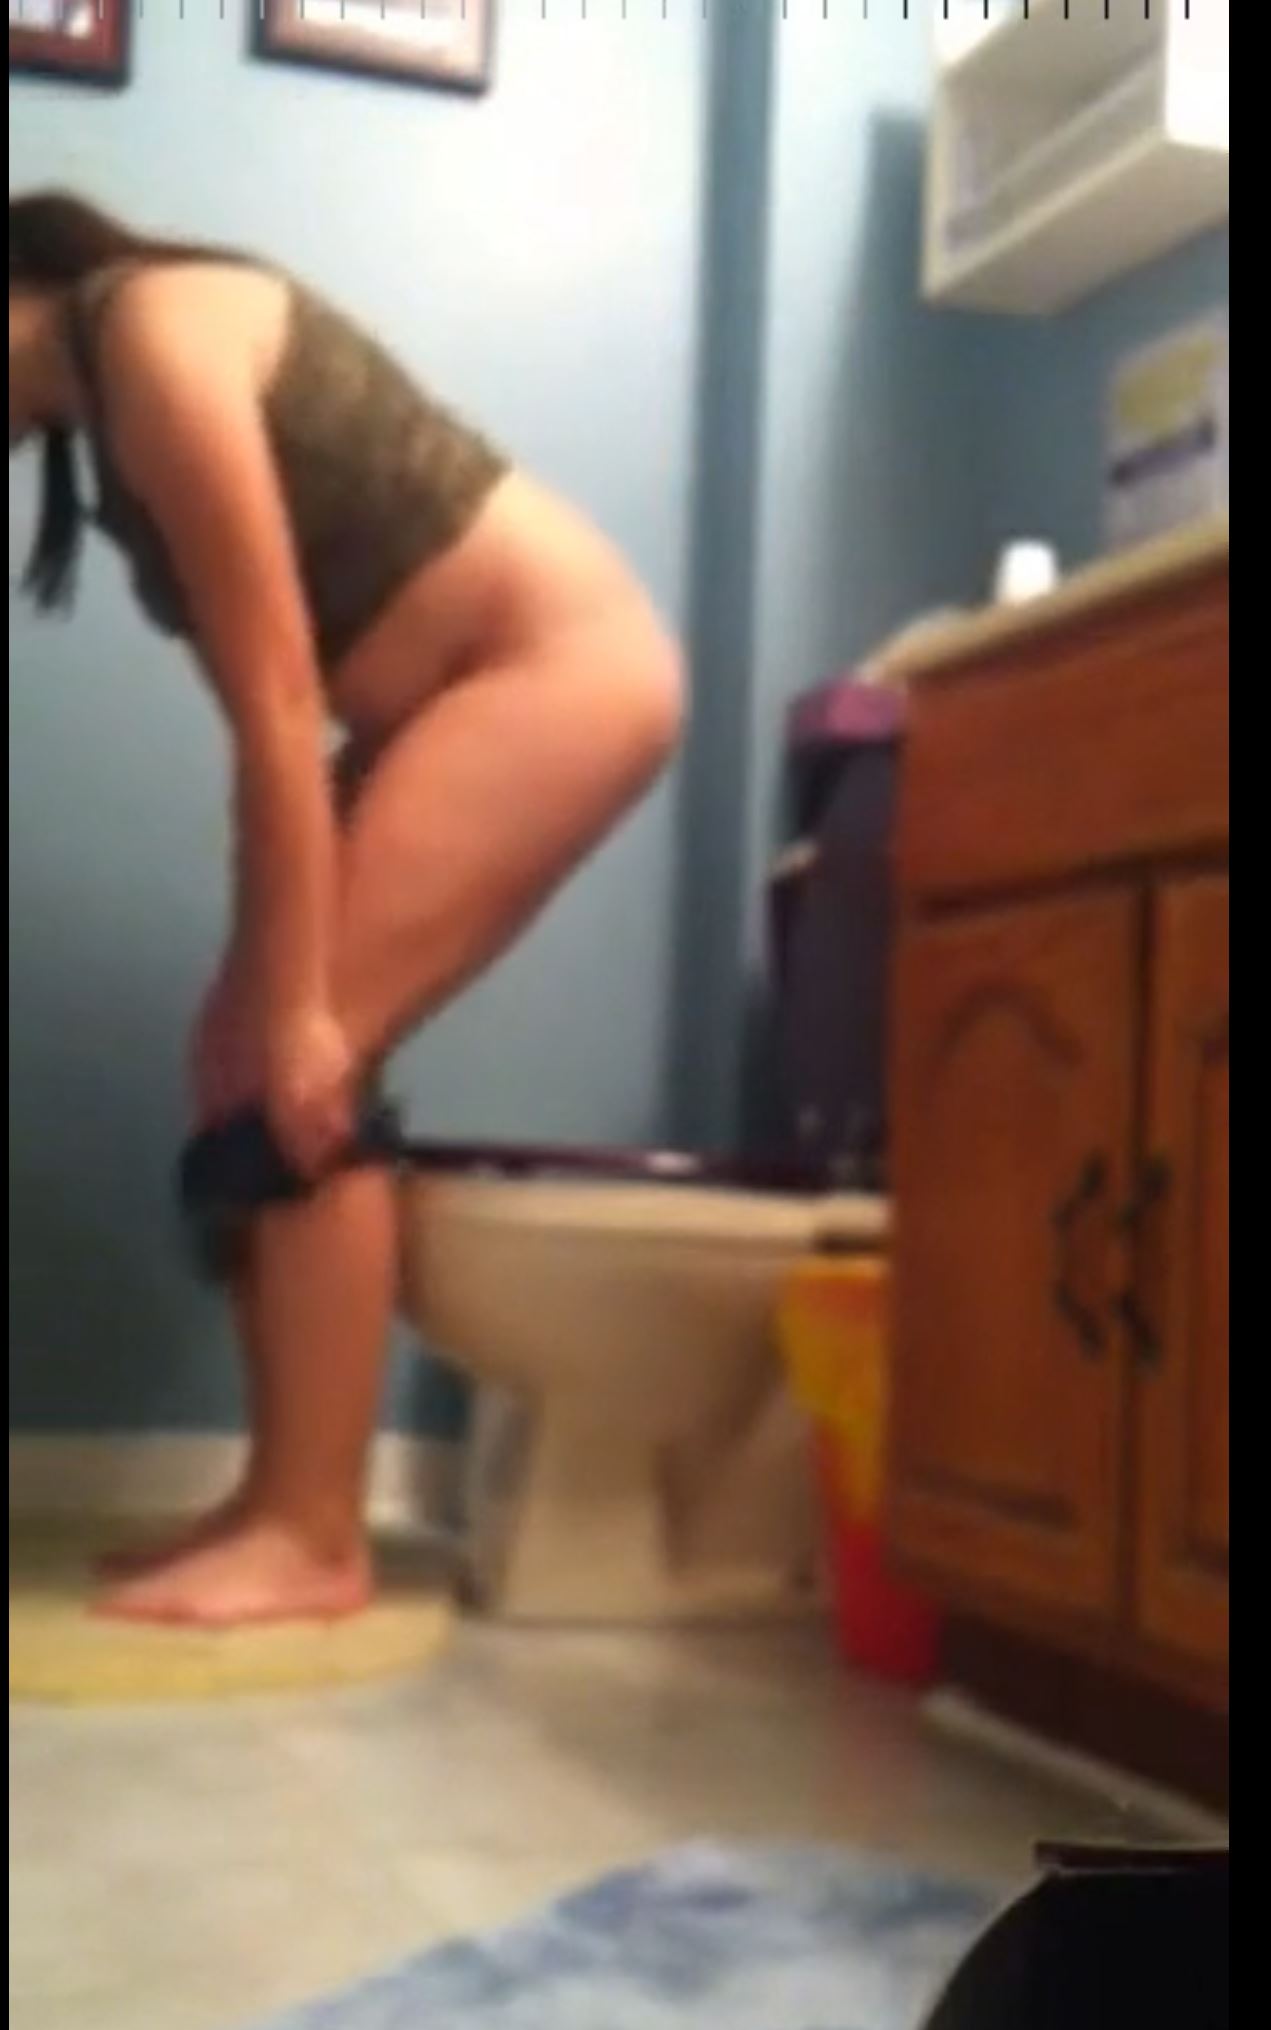 Cute Teen Girl Peeing On The Toilet. image